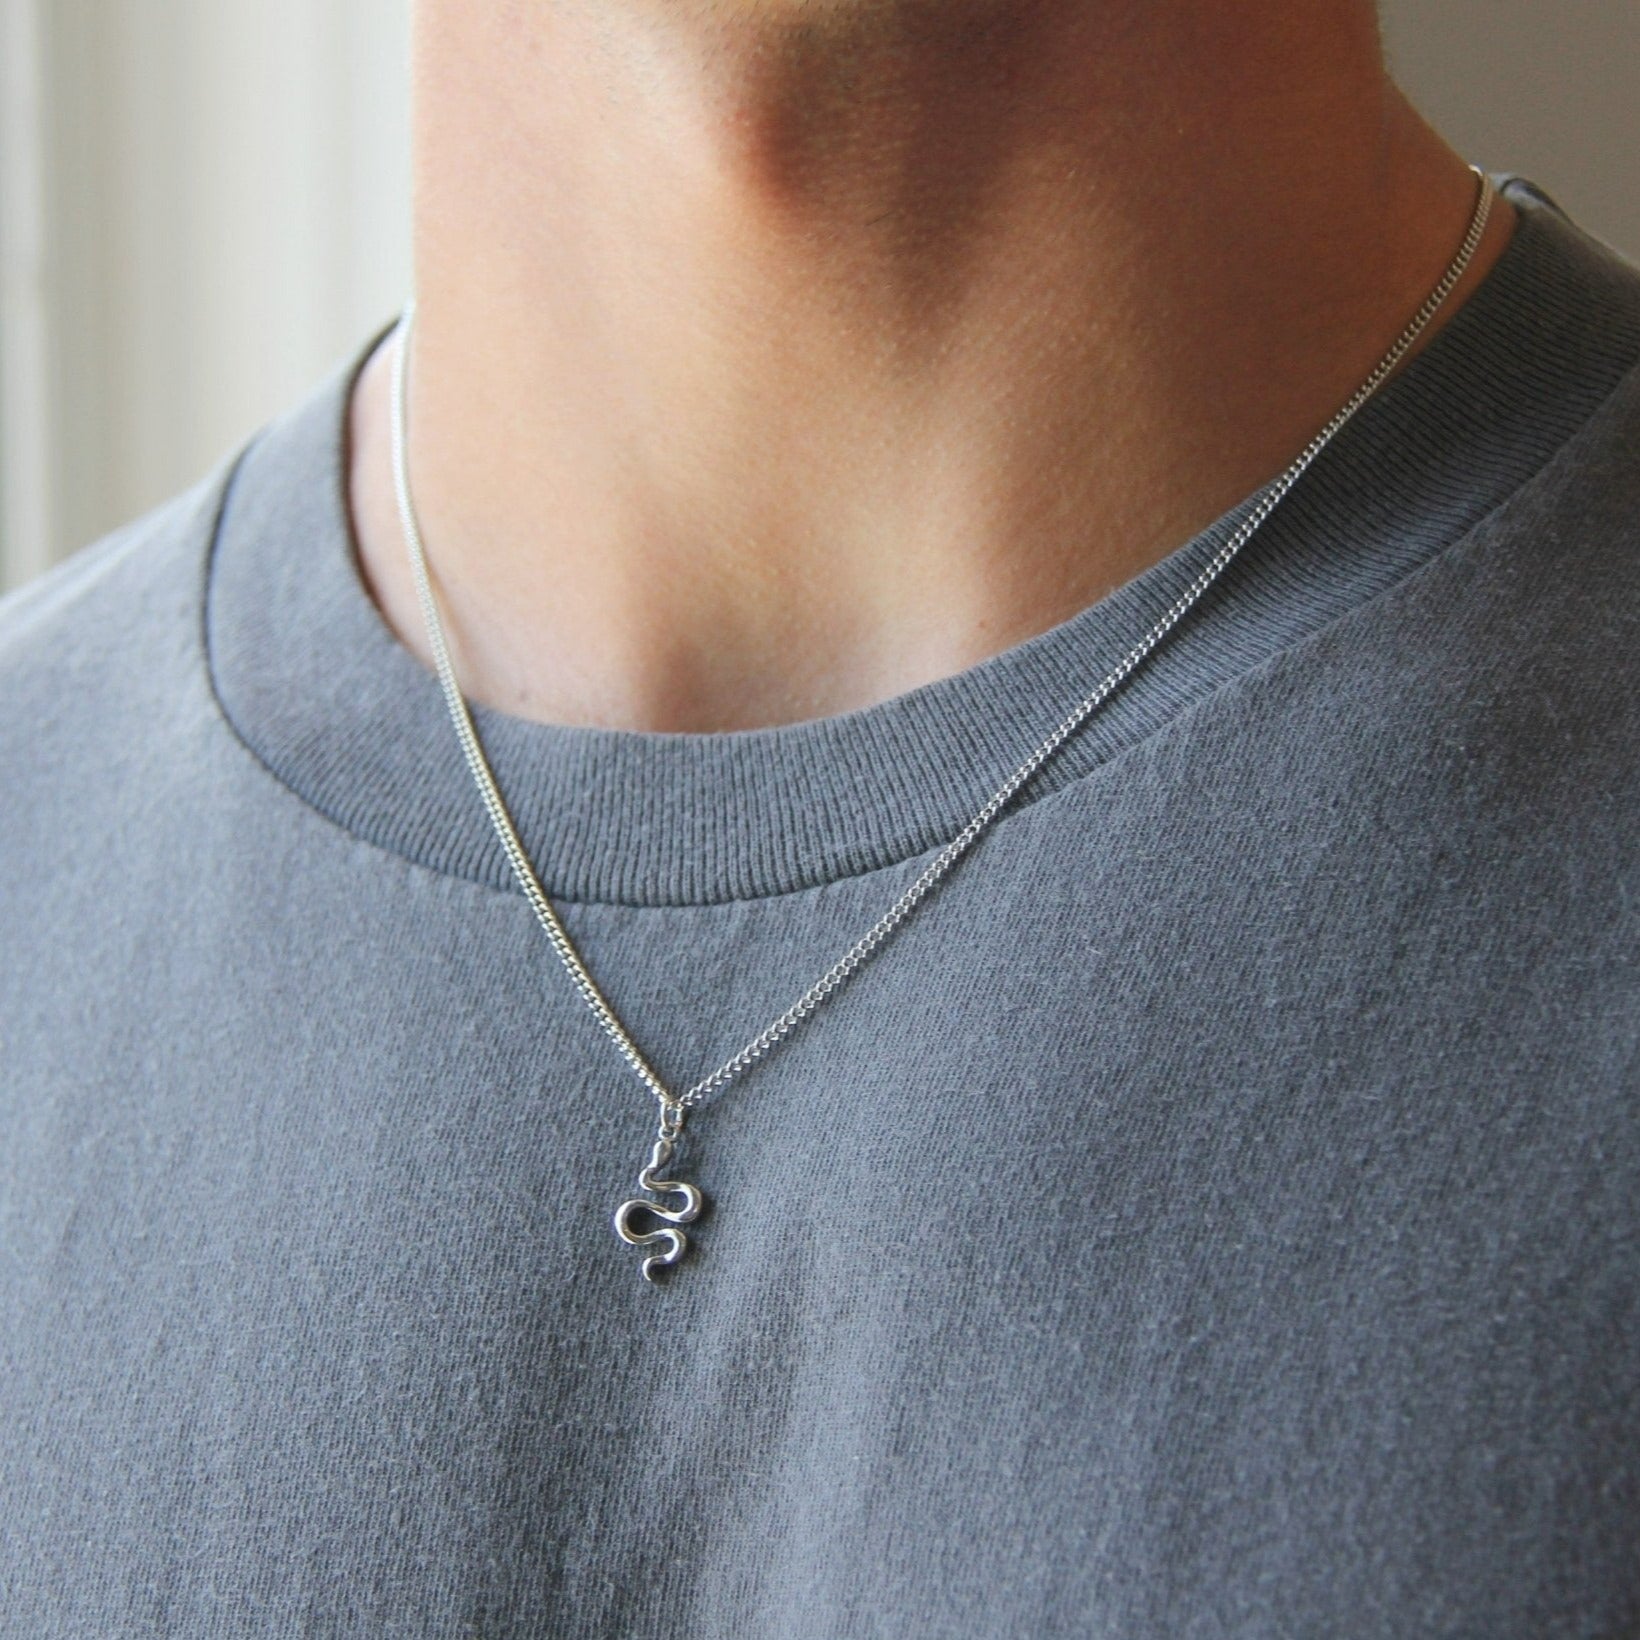 Silver Snake Pendant Necklace For Men or Women